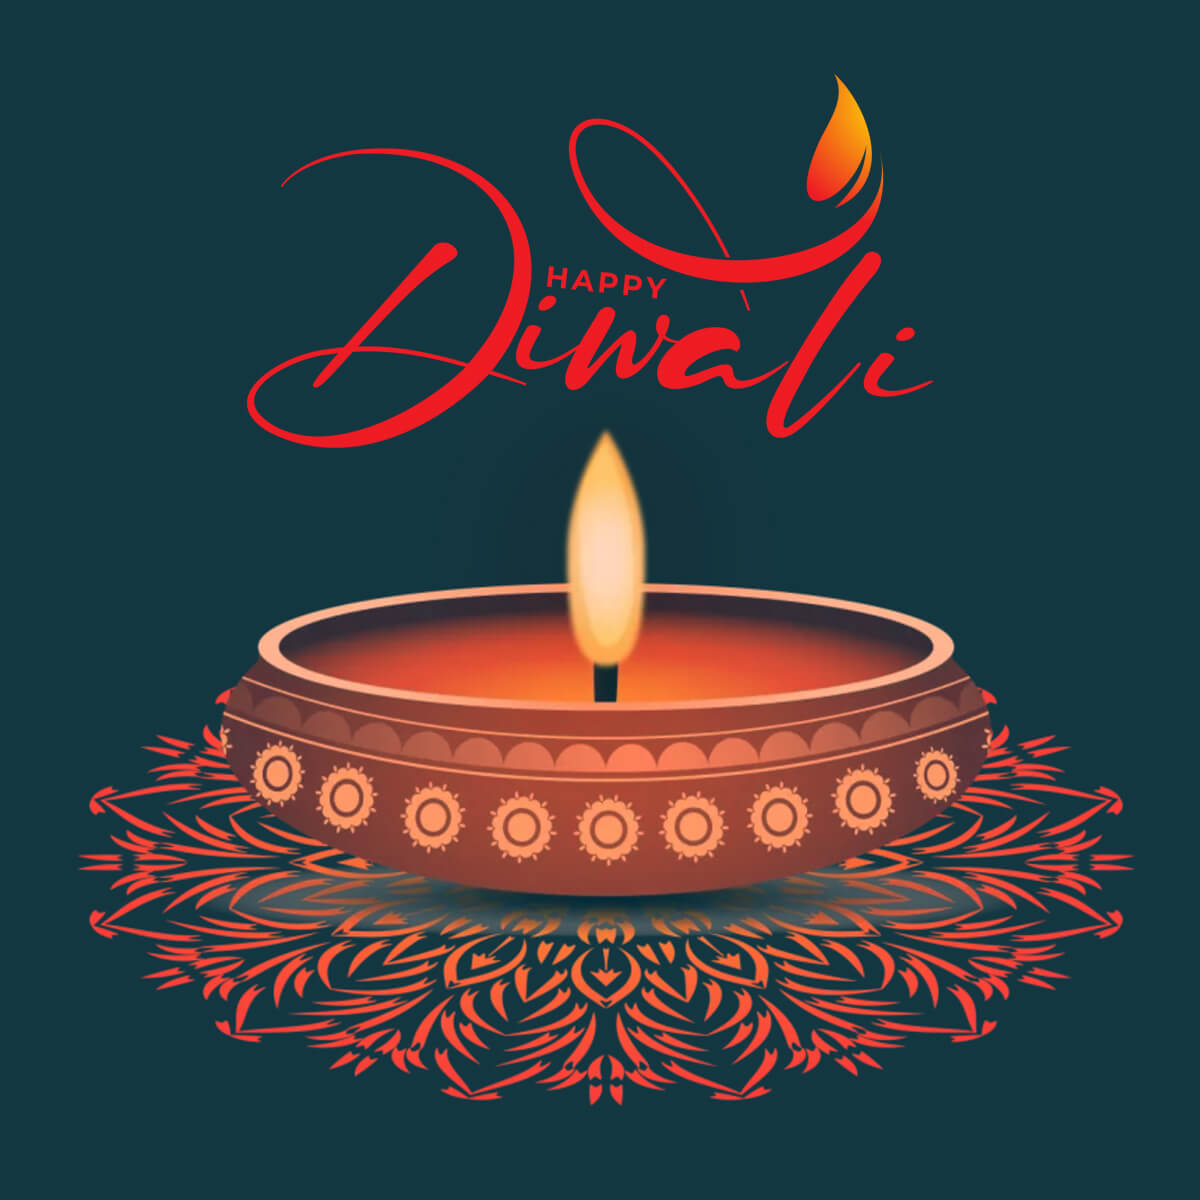 Happy diwali diya rangoli vector banner image - Pngfreepic